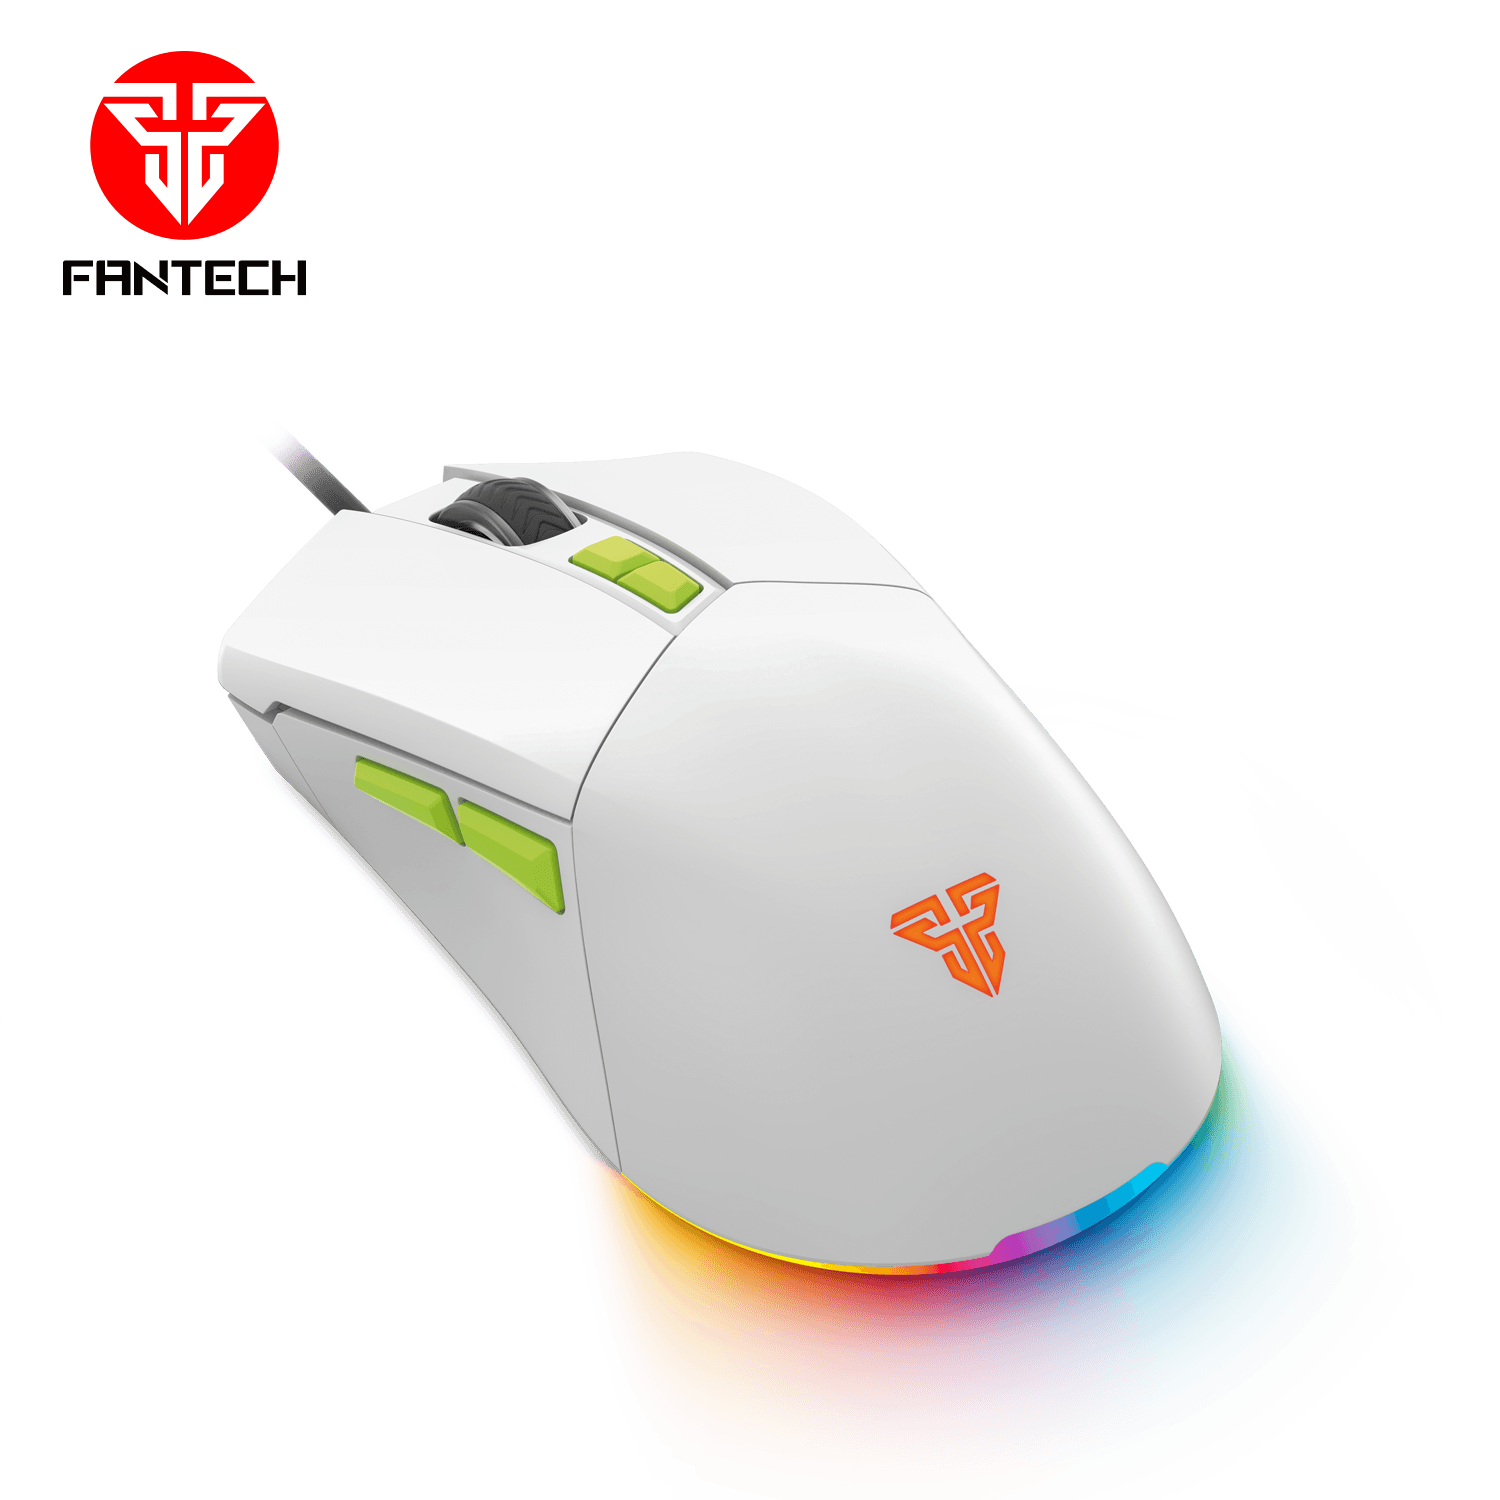 Fantech Phantom II VX6 Neon Macro Gaming Mouse - Fantech Jordan | Gaming Accessories Store 